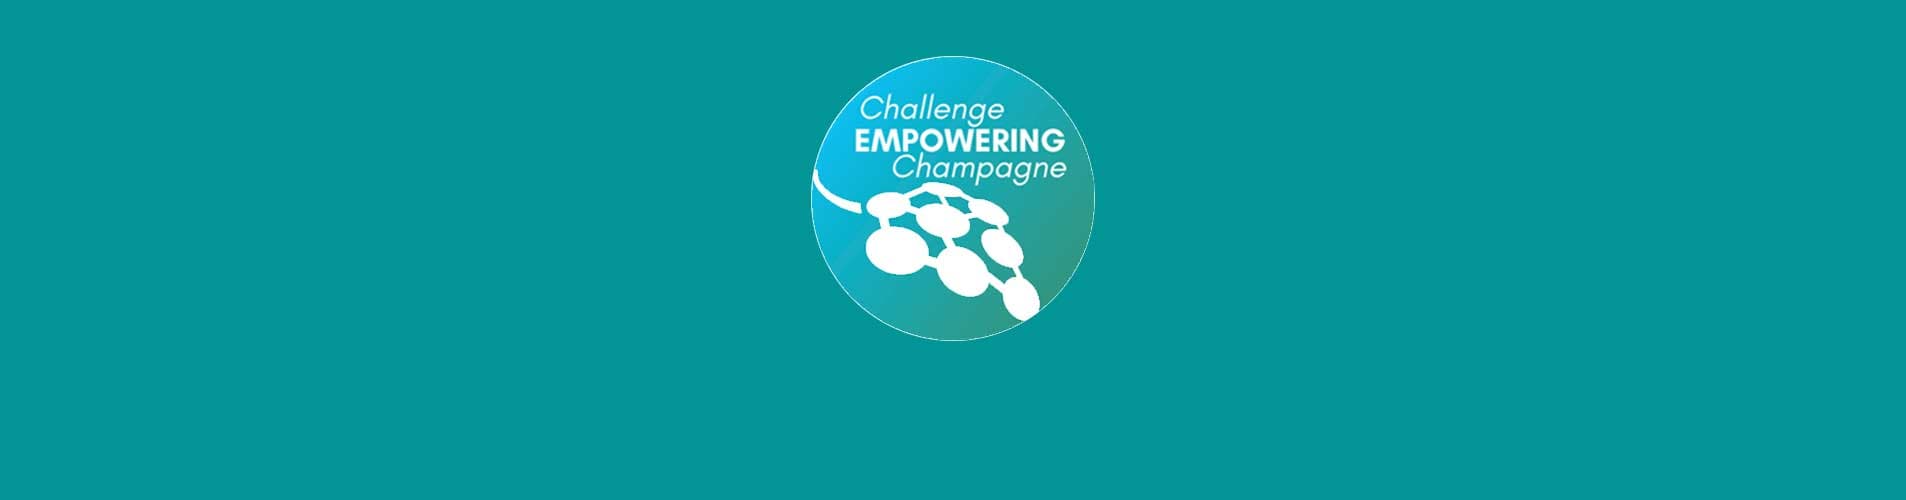  challenge empowering champagne credit agricole du nord est